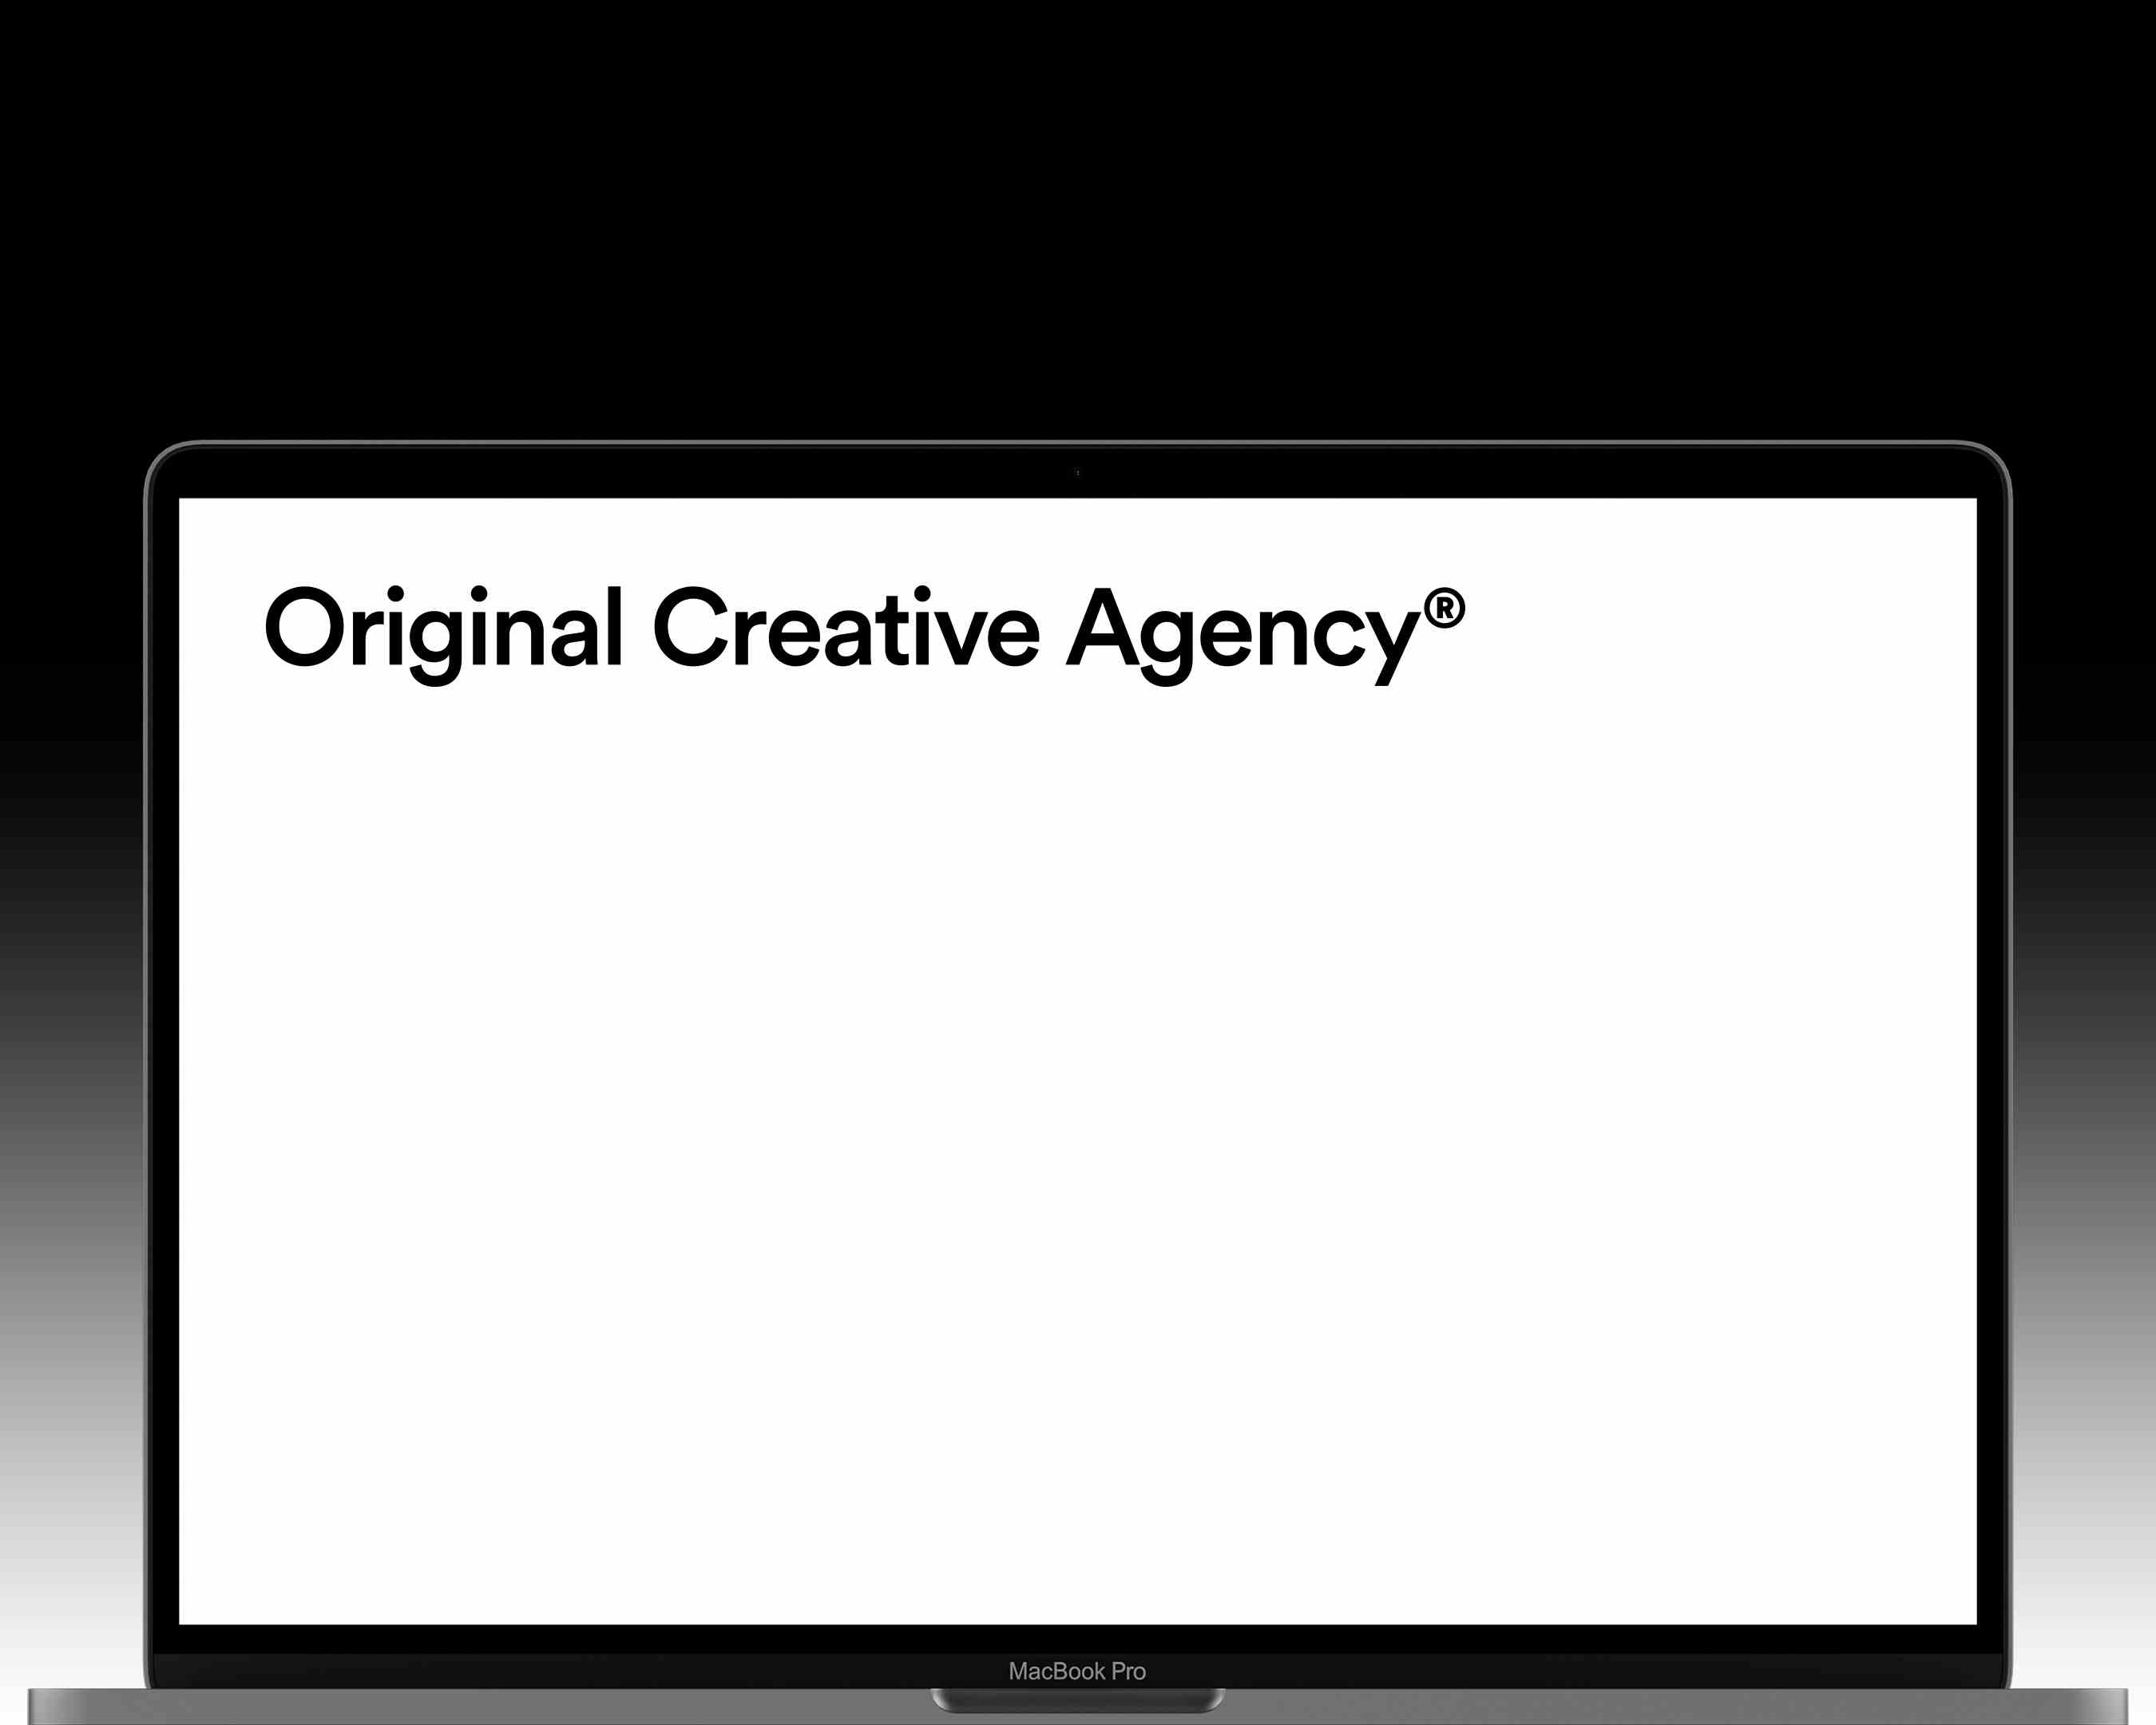 Original Creative Agency Art Direction & Design Identity, Layout Design & More